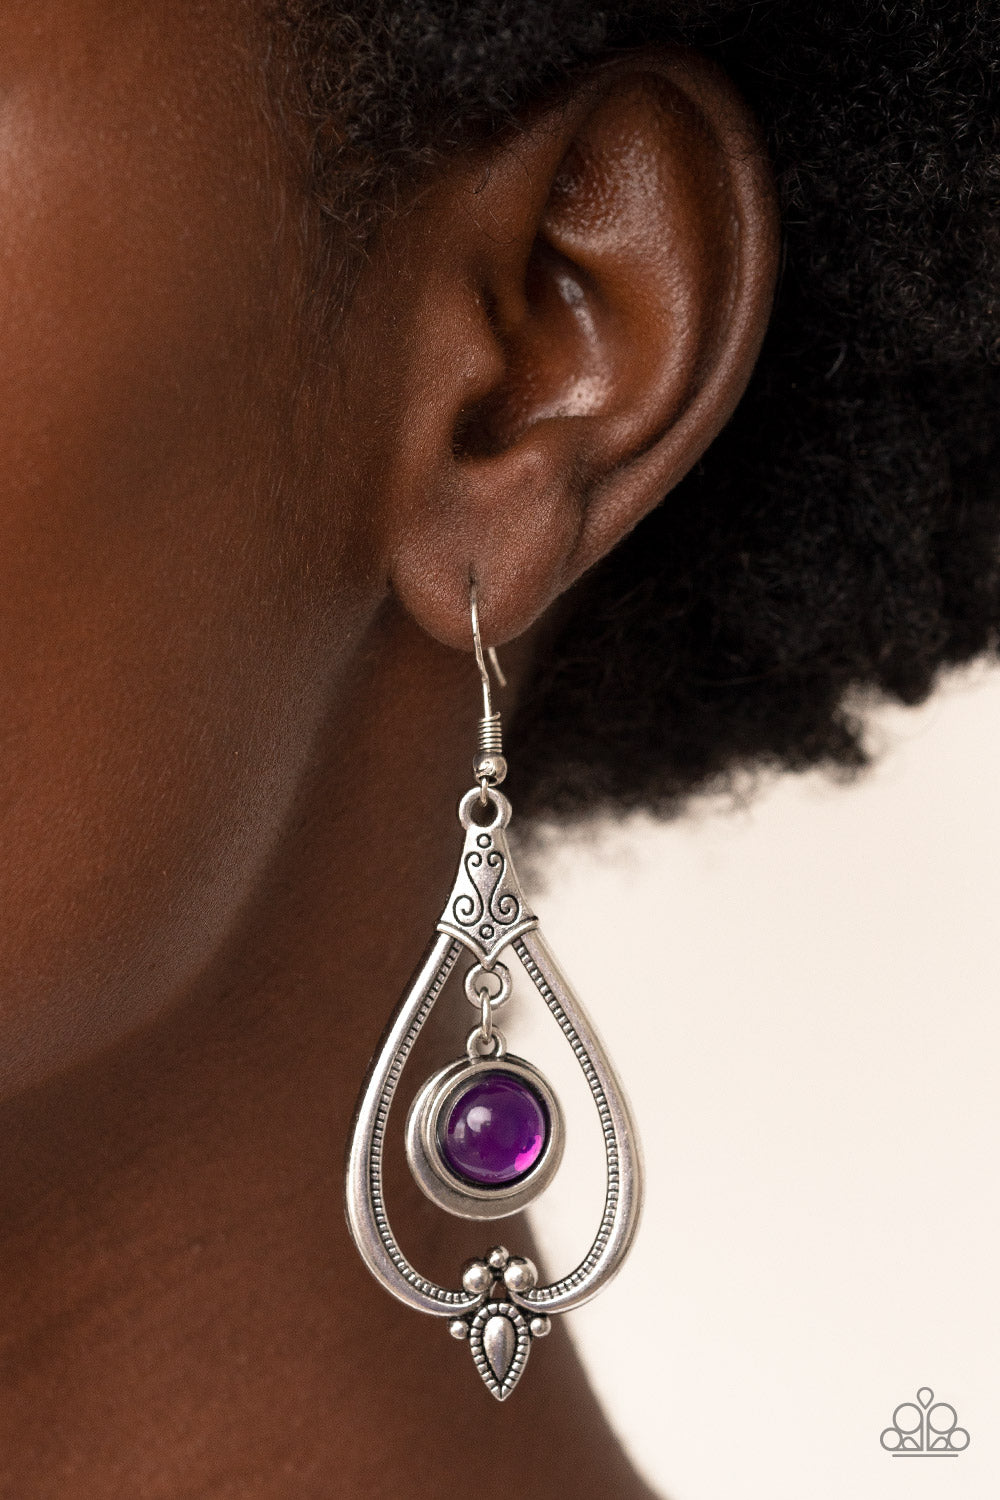 Ethereal Emblem - Purple earrings